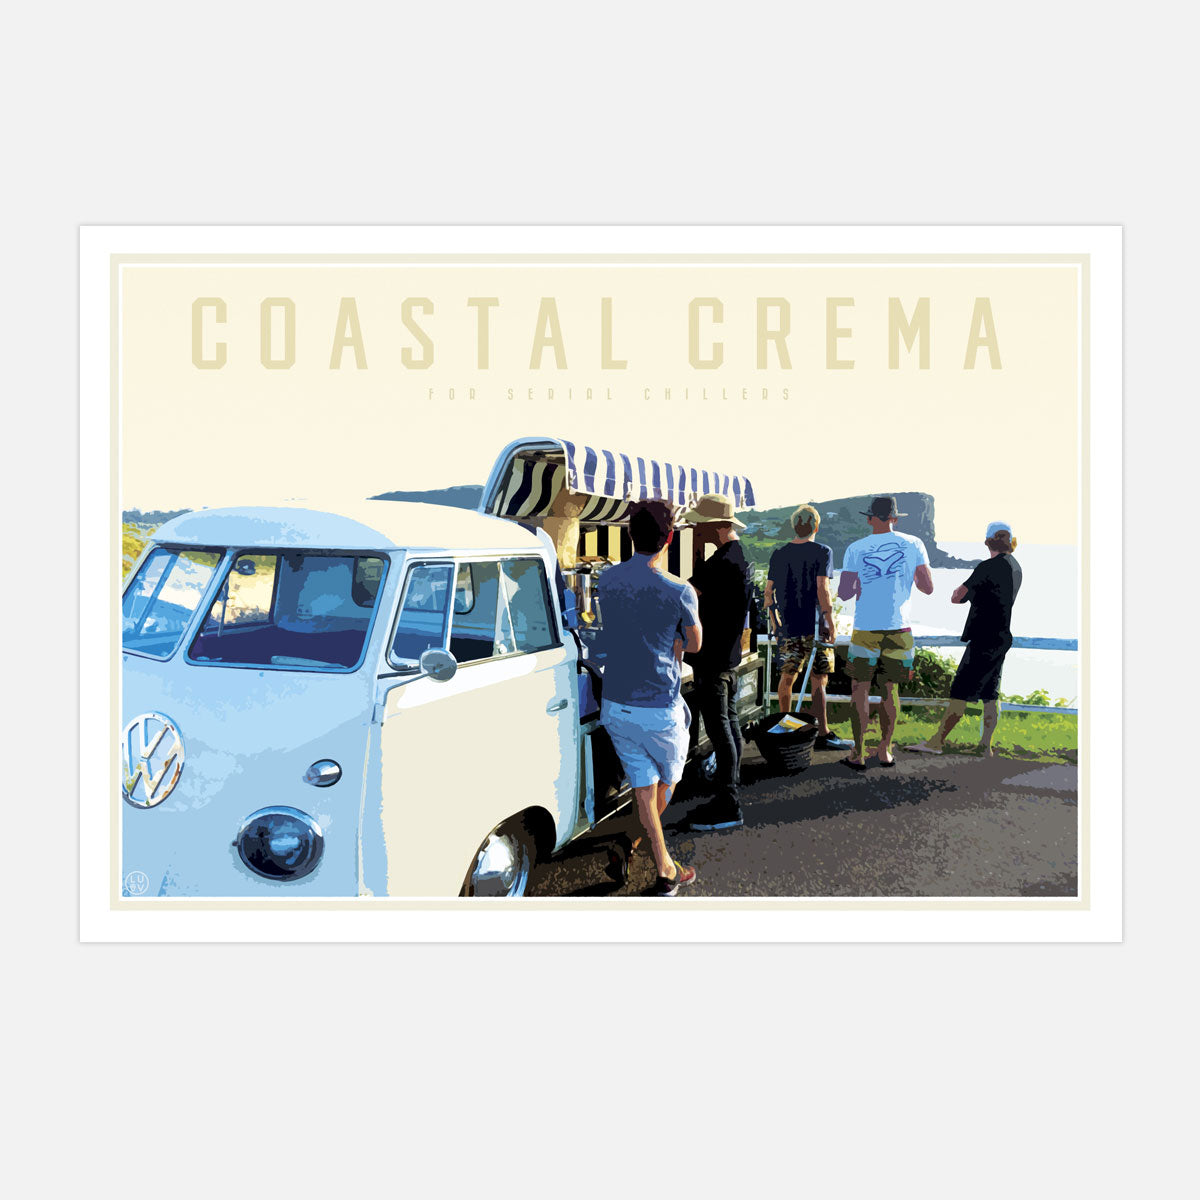 Coastal Crema beaches print  by places we luv